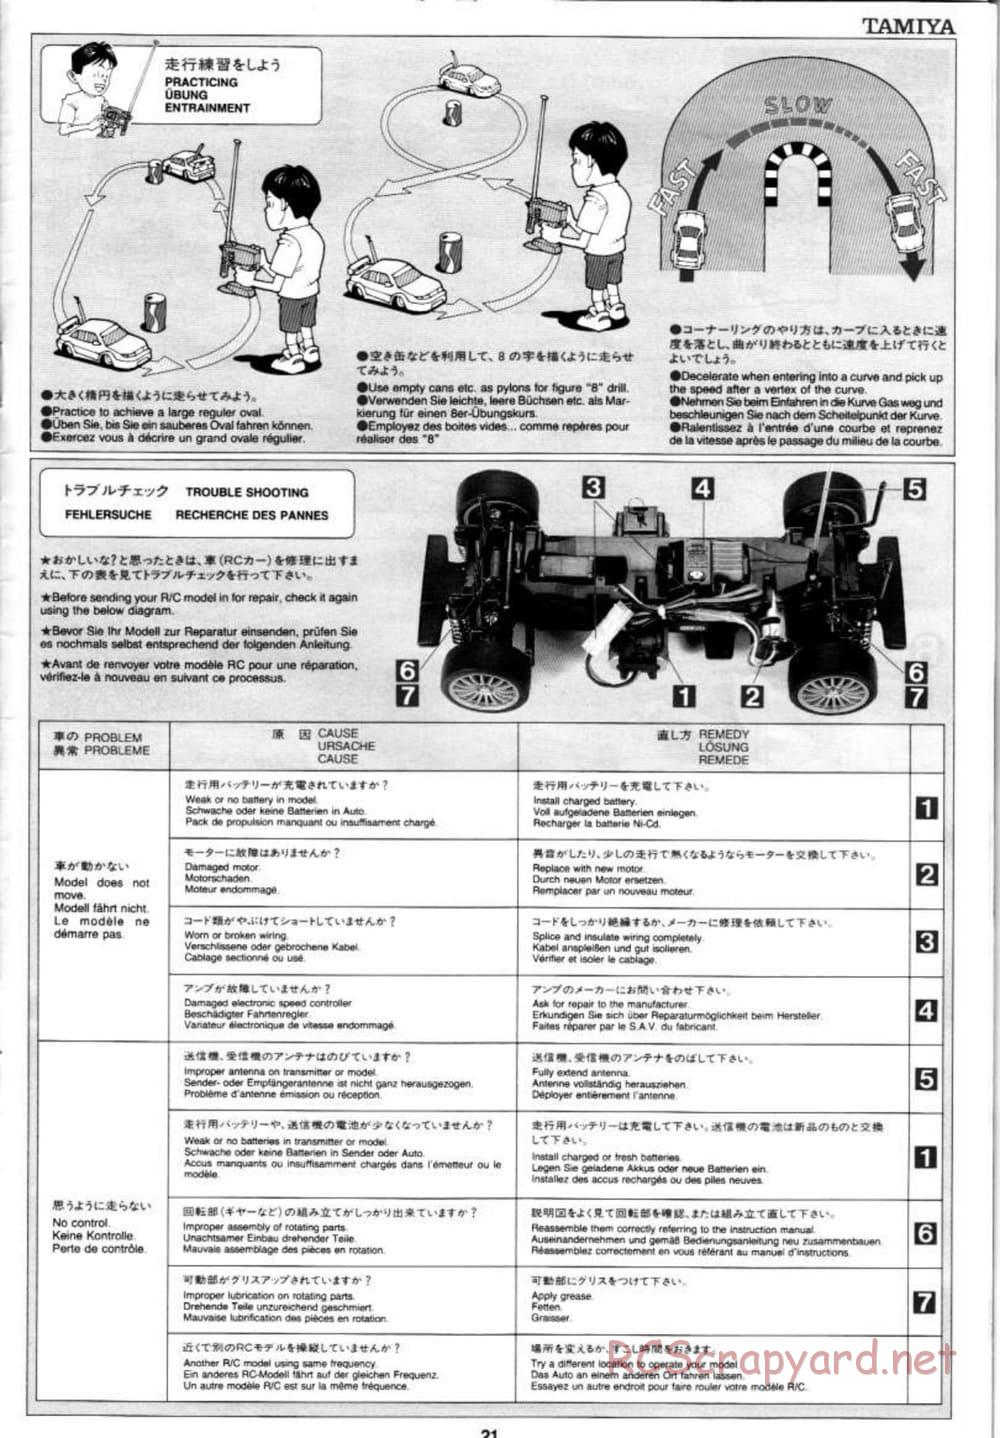 Tamiya - Peugeot 406 ST - TL-01 Chassis - Manual - Page 21